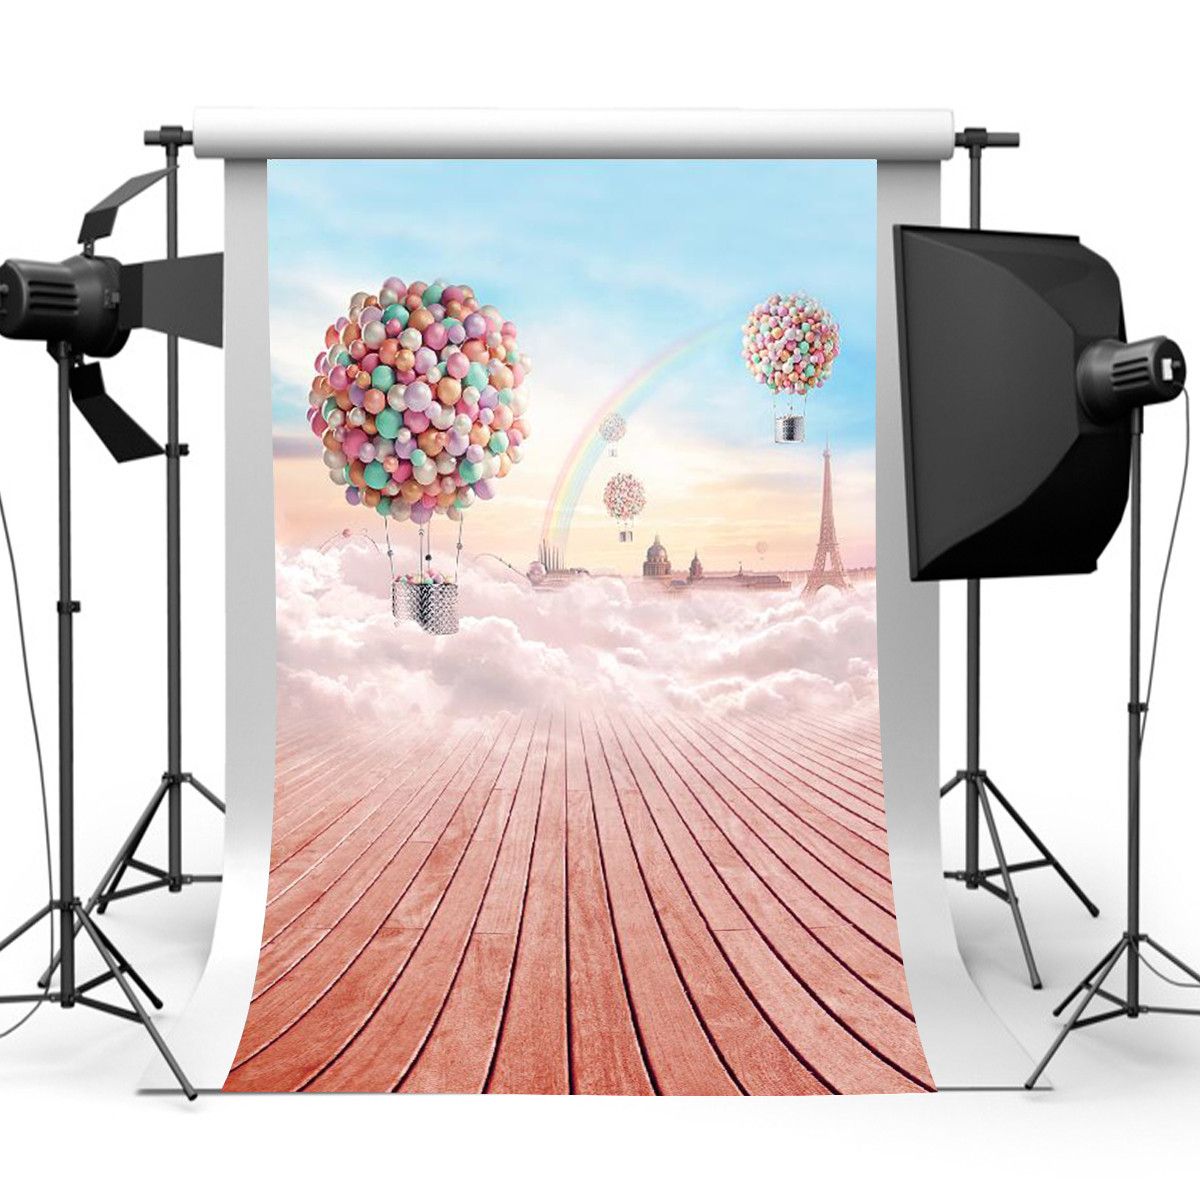 3-x-5ft-Colorful-Sky-Balloon-Wood-Floor-Studio-Photography-Backdrops-Background-1673357